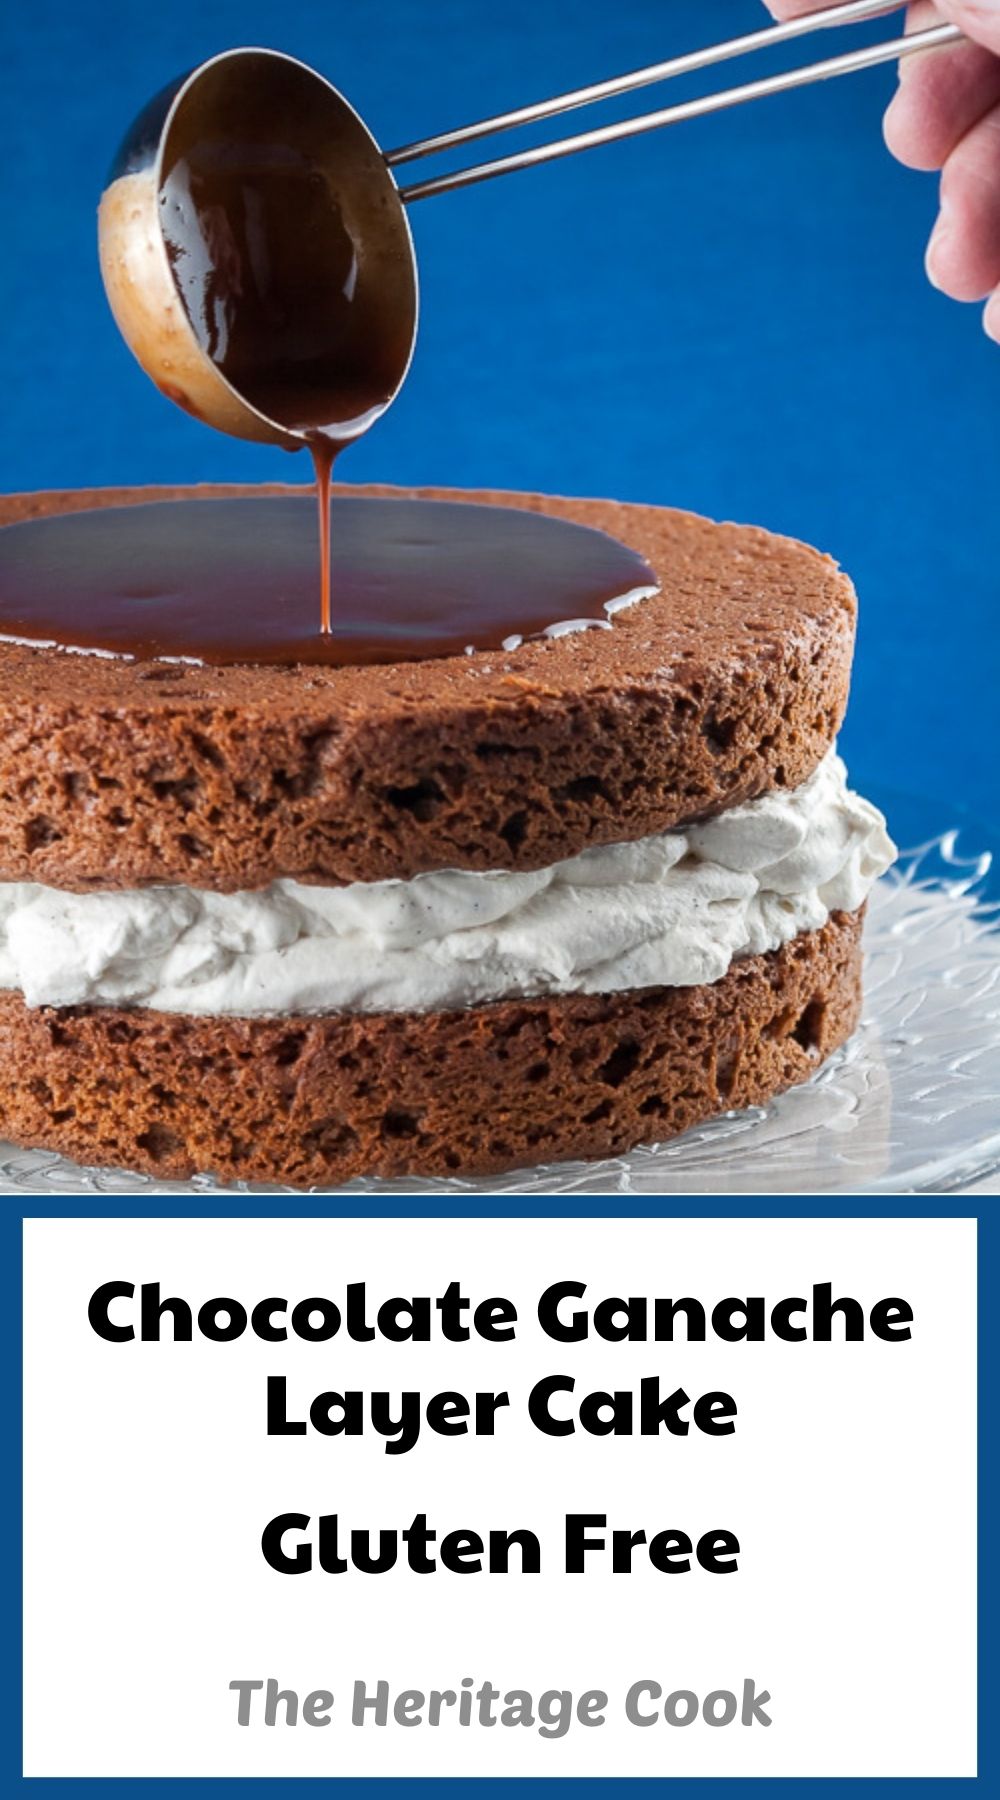 Chocolate Ganache Cake with Whipped Cream Filling © 2021 Jane Bonacci, The Heritage Cook